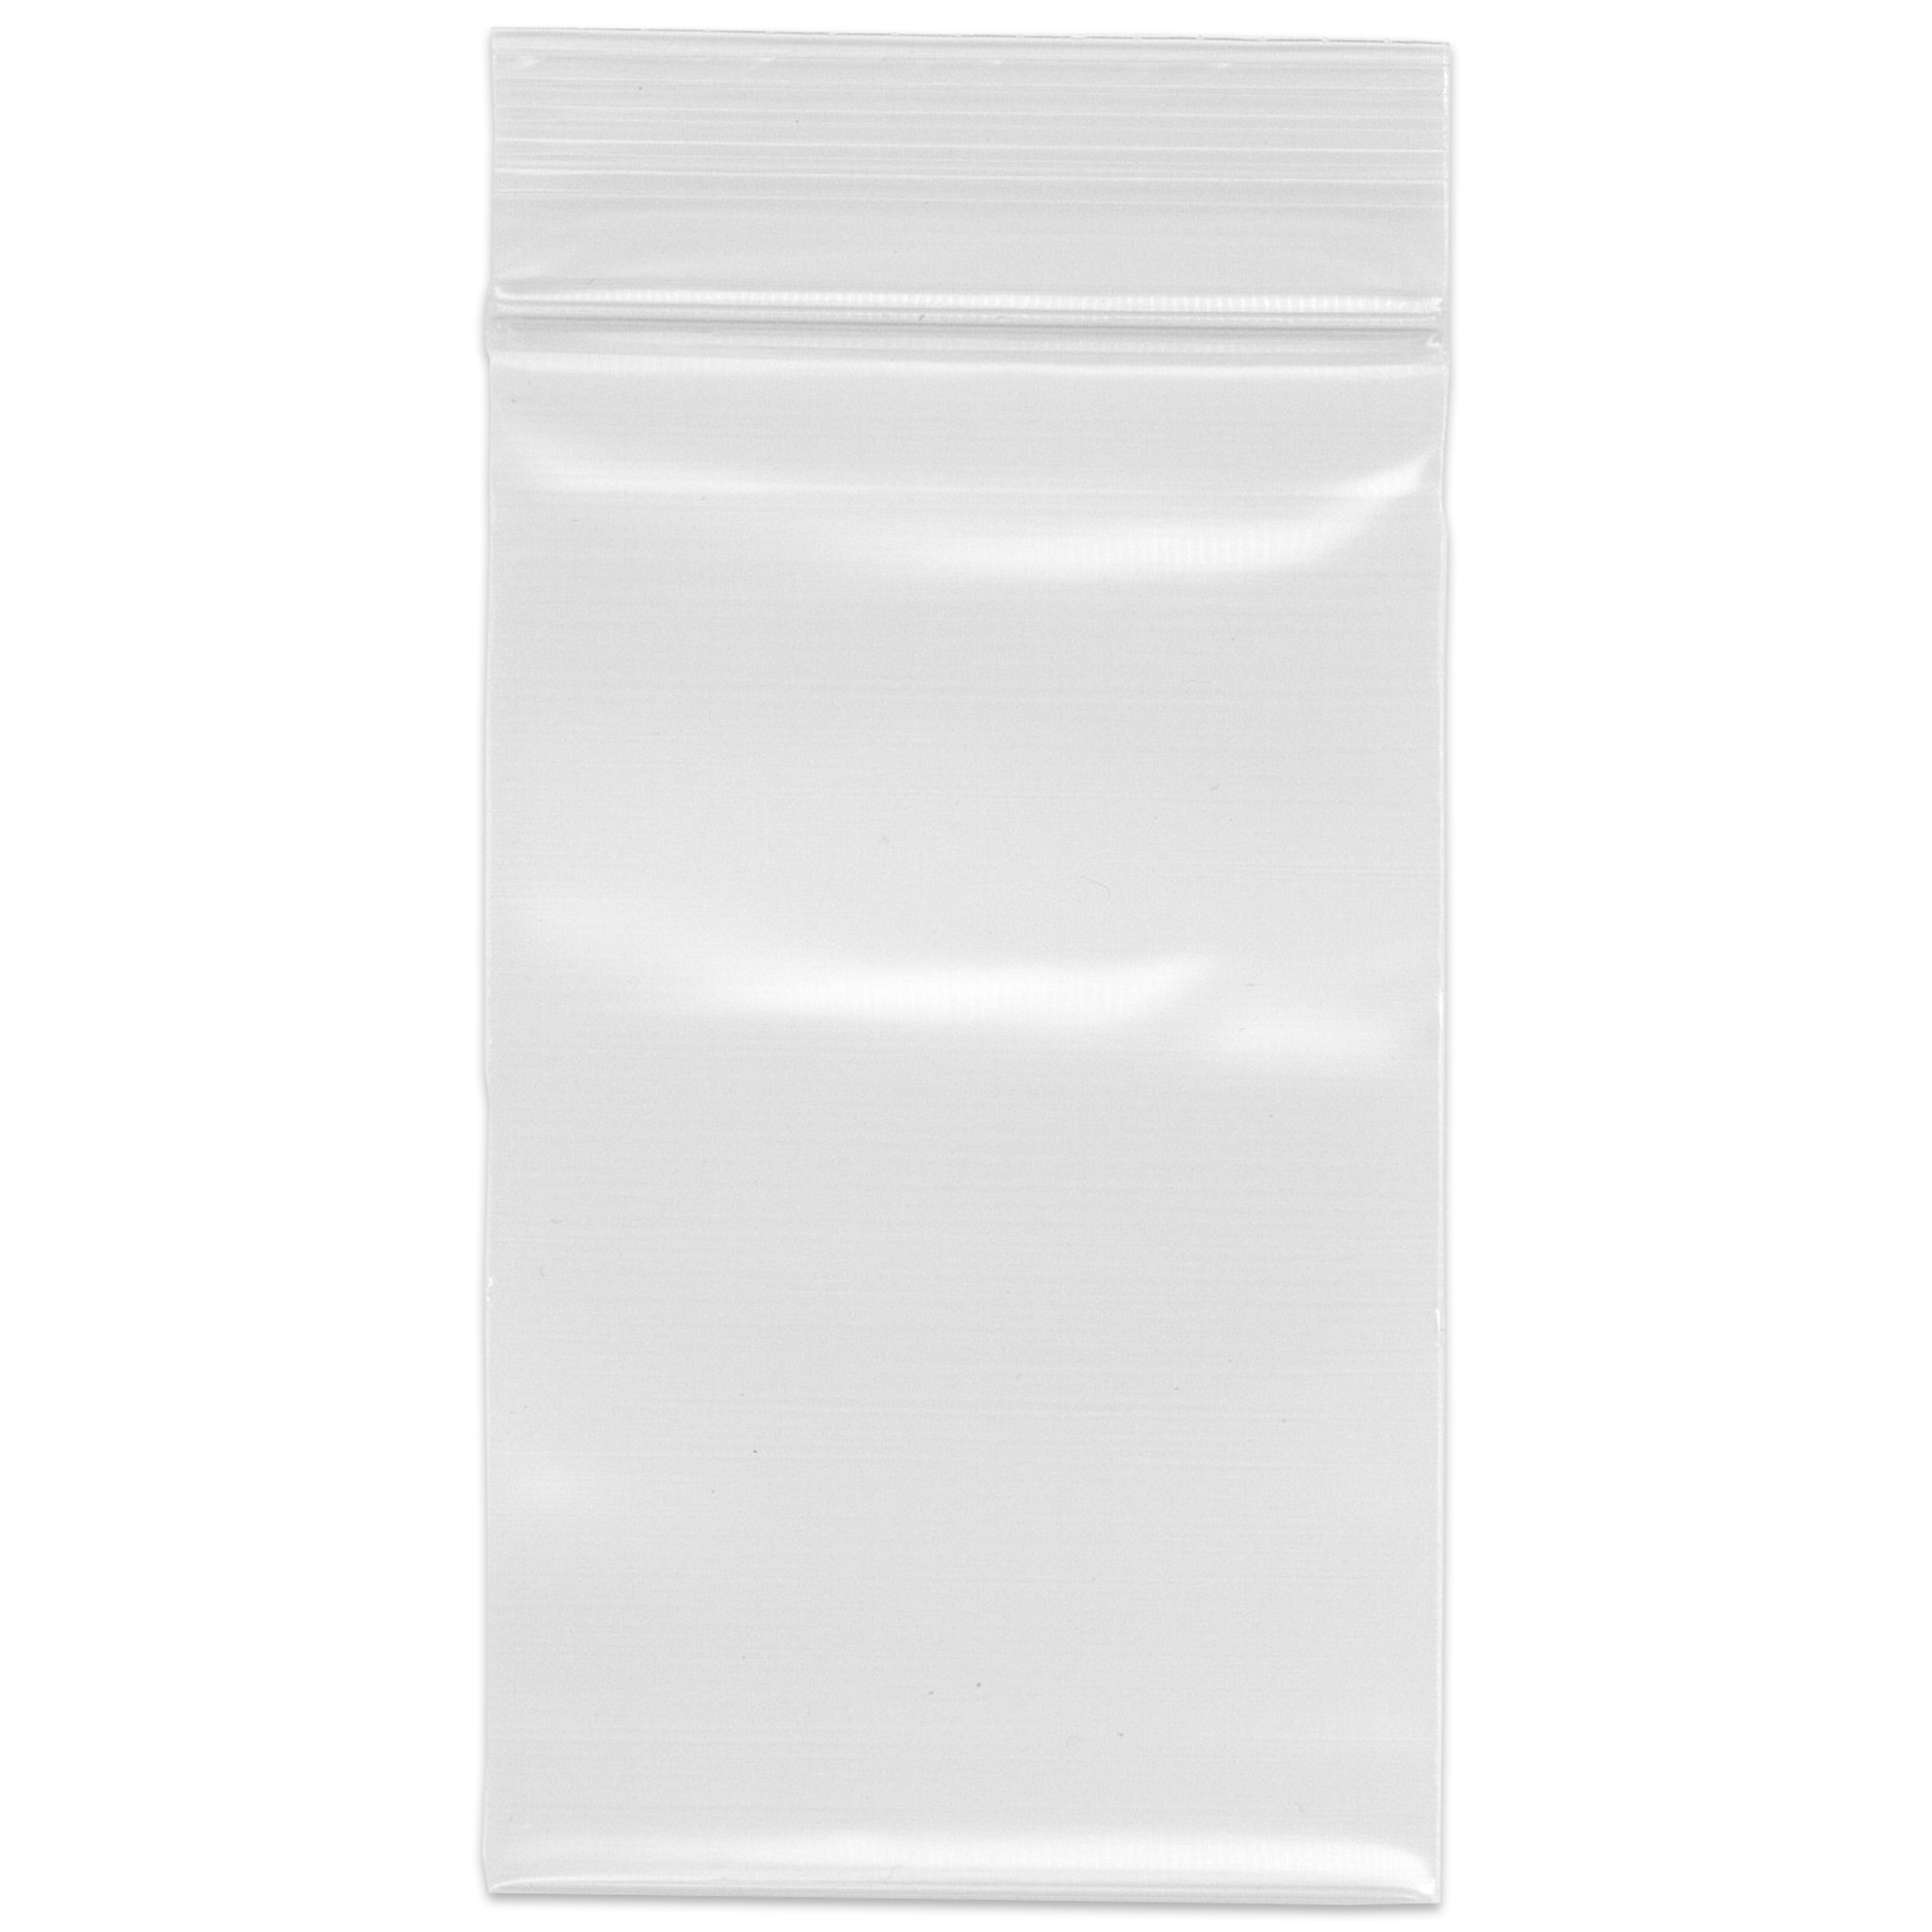 Plymor Zipper Reclosable Plastic Bags, 2 Mil, 2.5 x 2.5 (Case of 1,000)